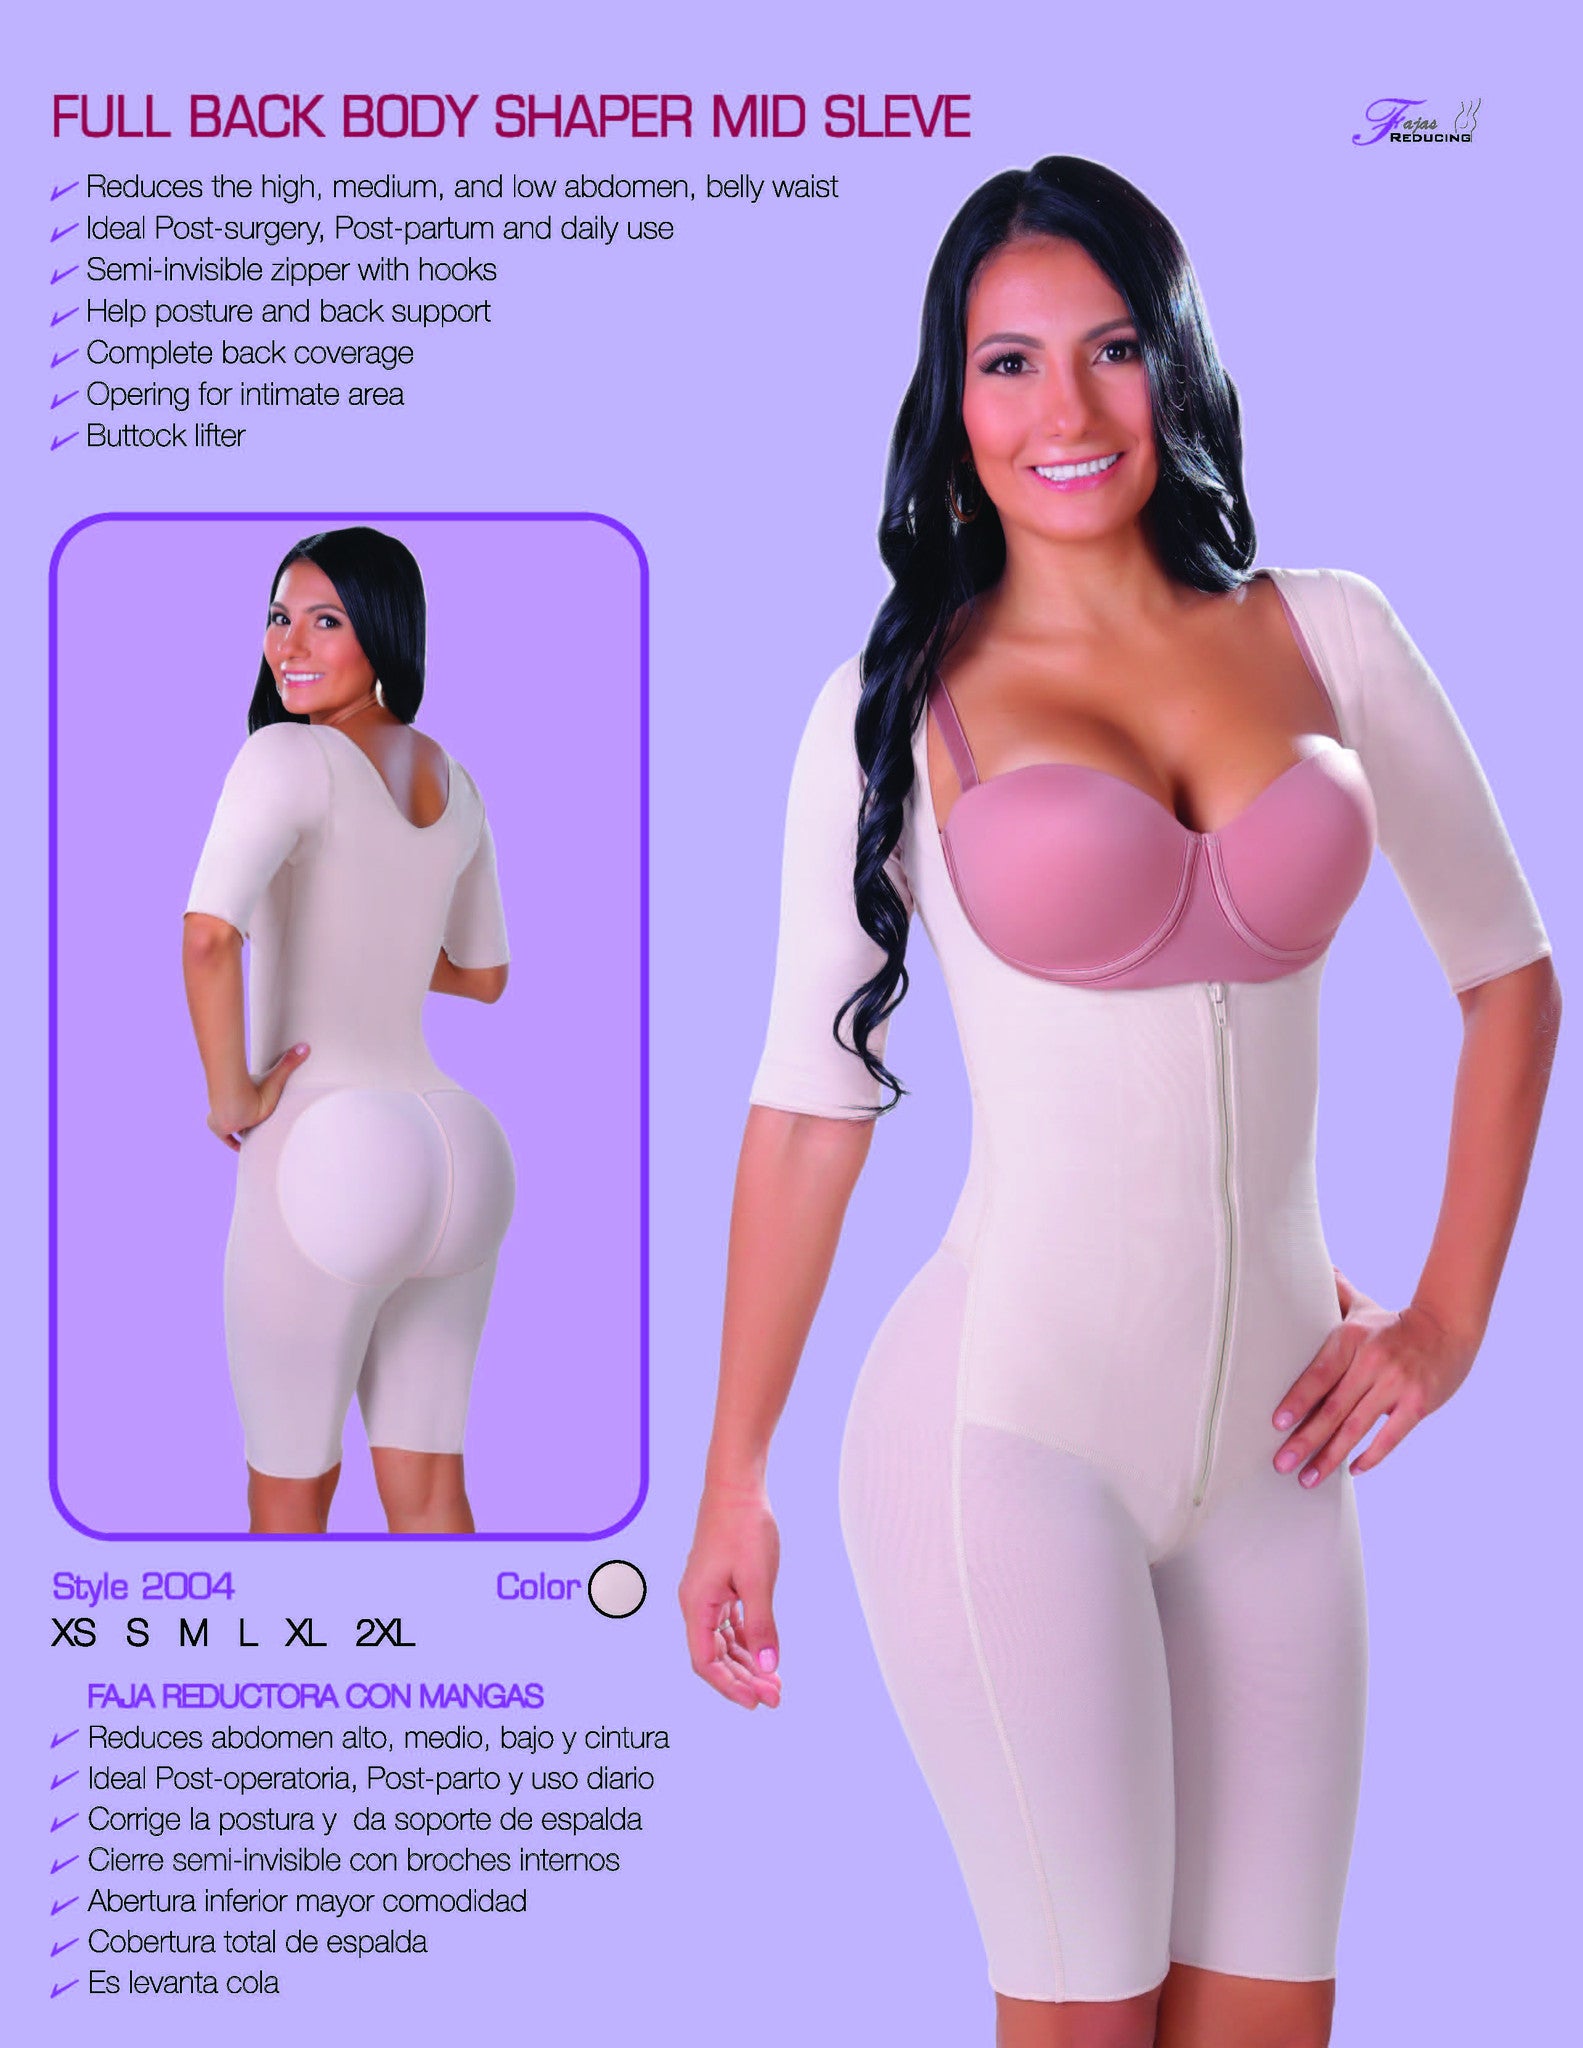 Body Faja Reductor modelo 167 – Mujer Moderna USA